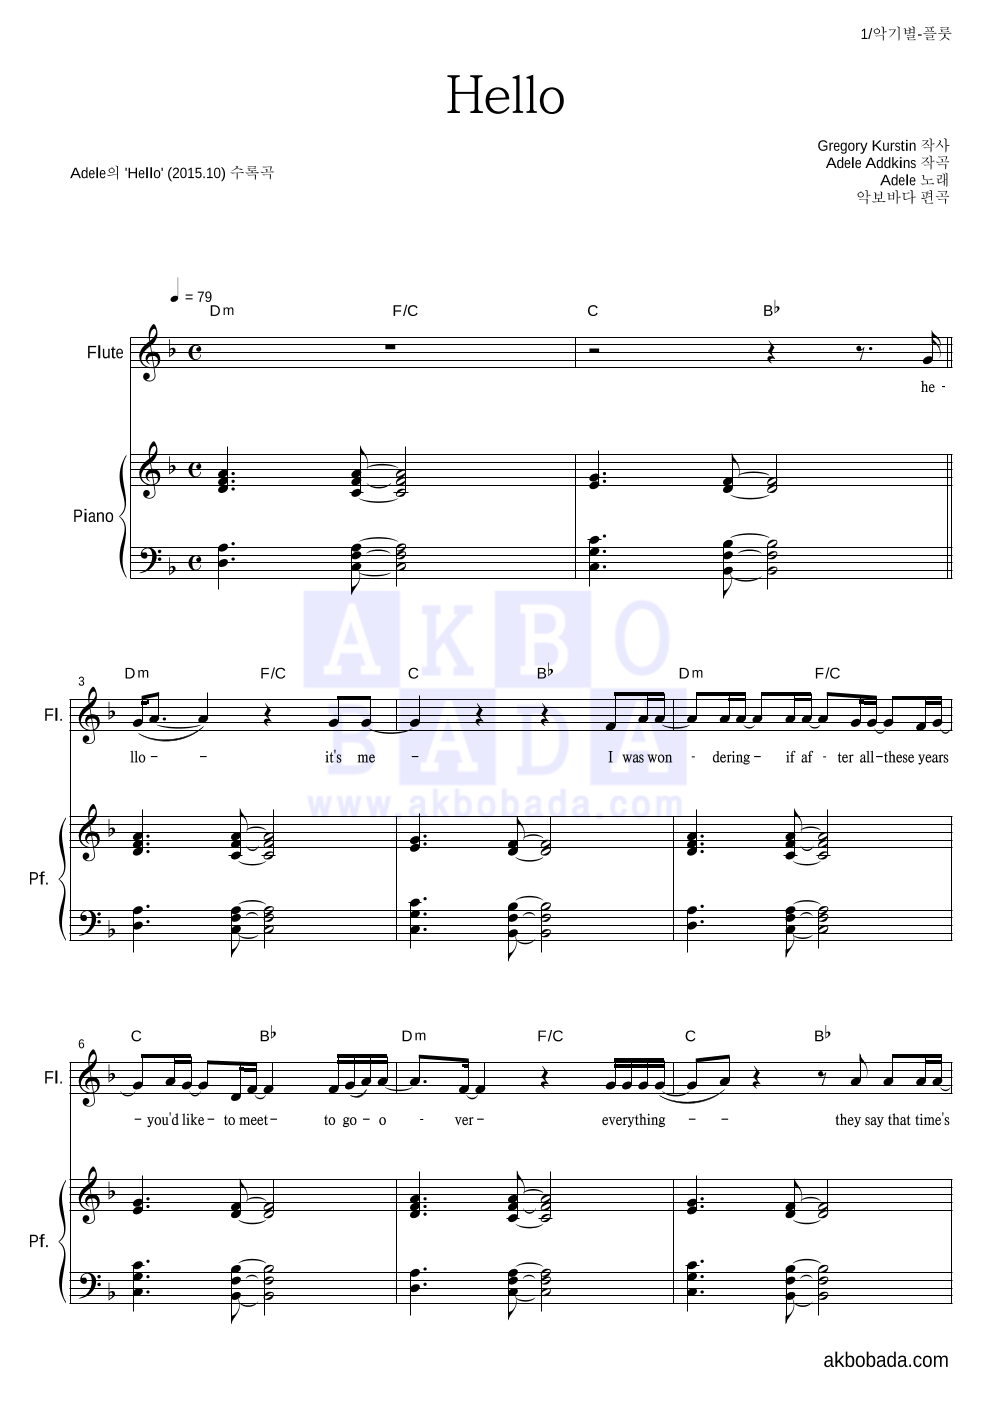 Adele - Hello 플룻&피아노 악보 